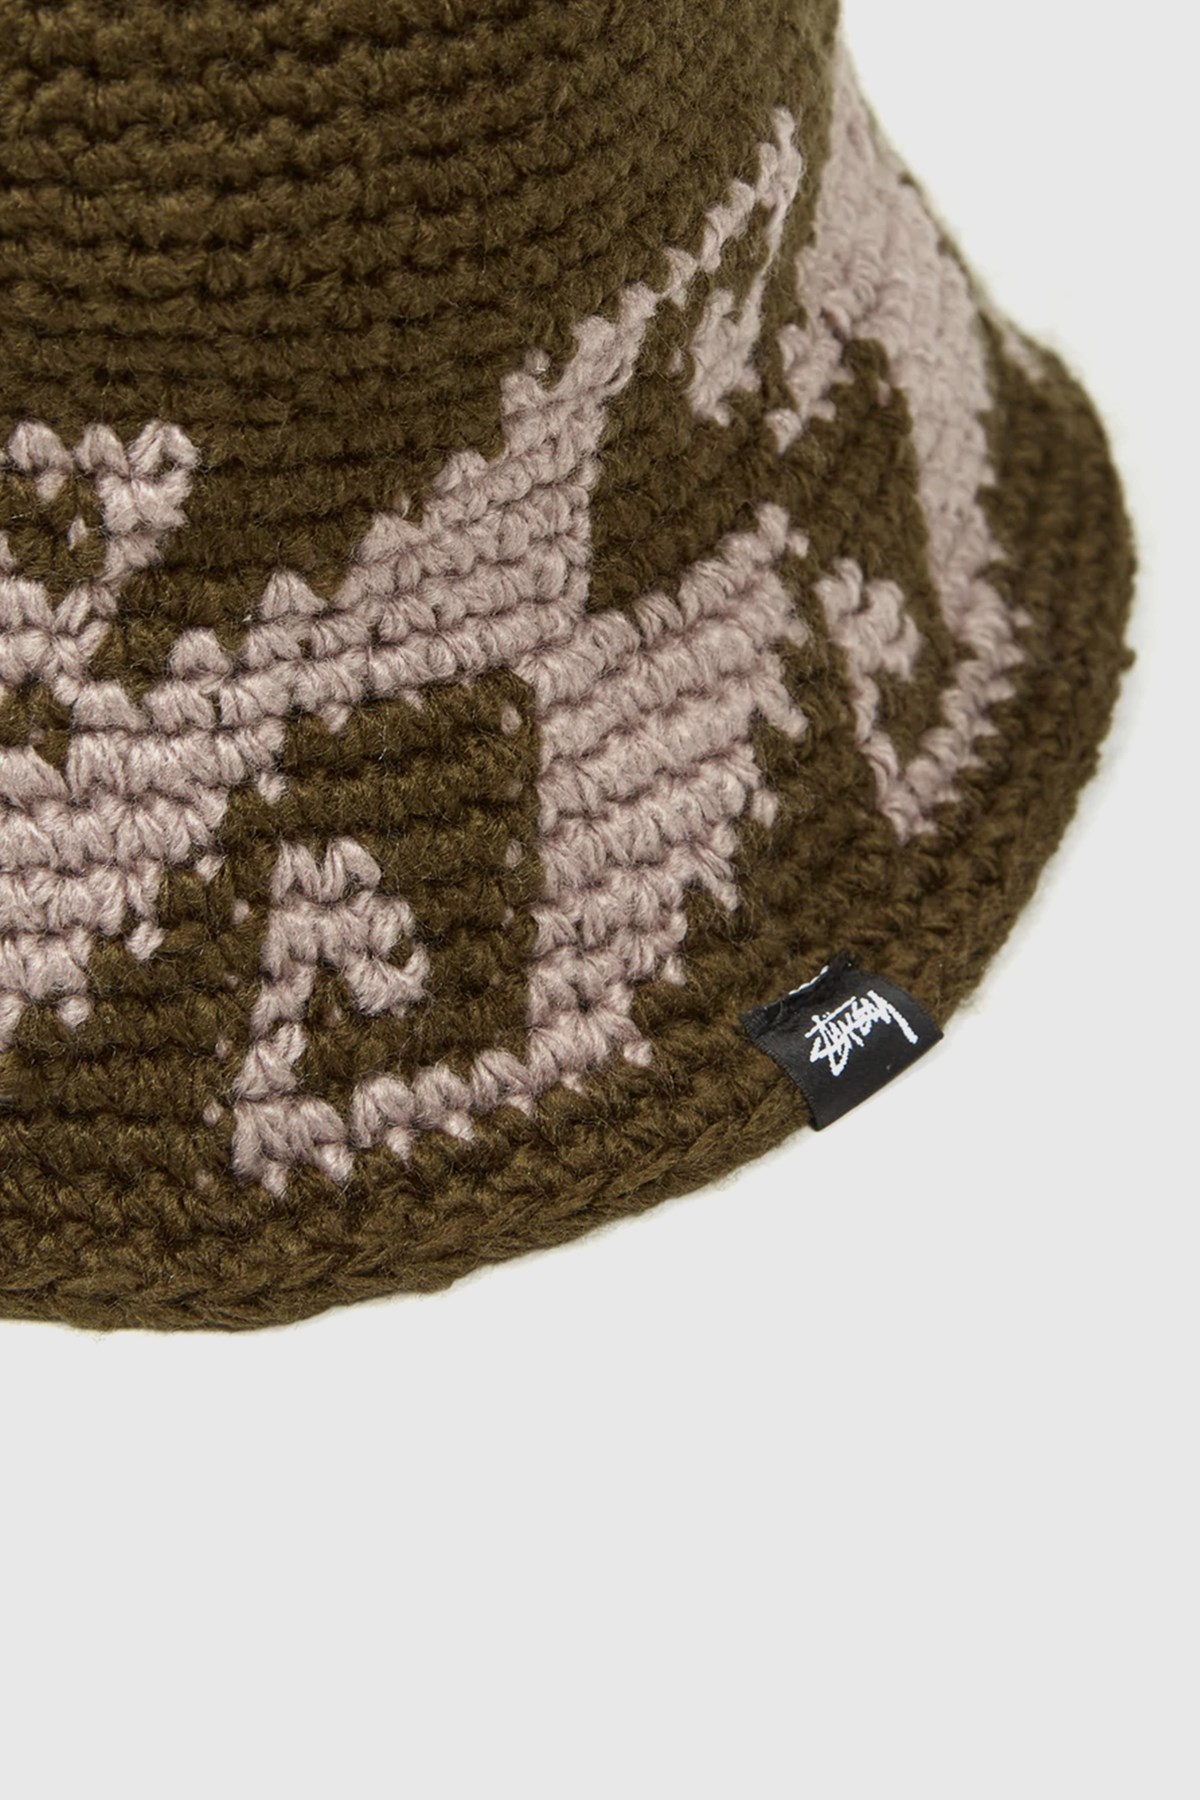 Stüssy Waves Knit Bucket Hat Olive | WoodWood.com